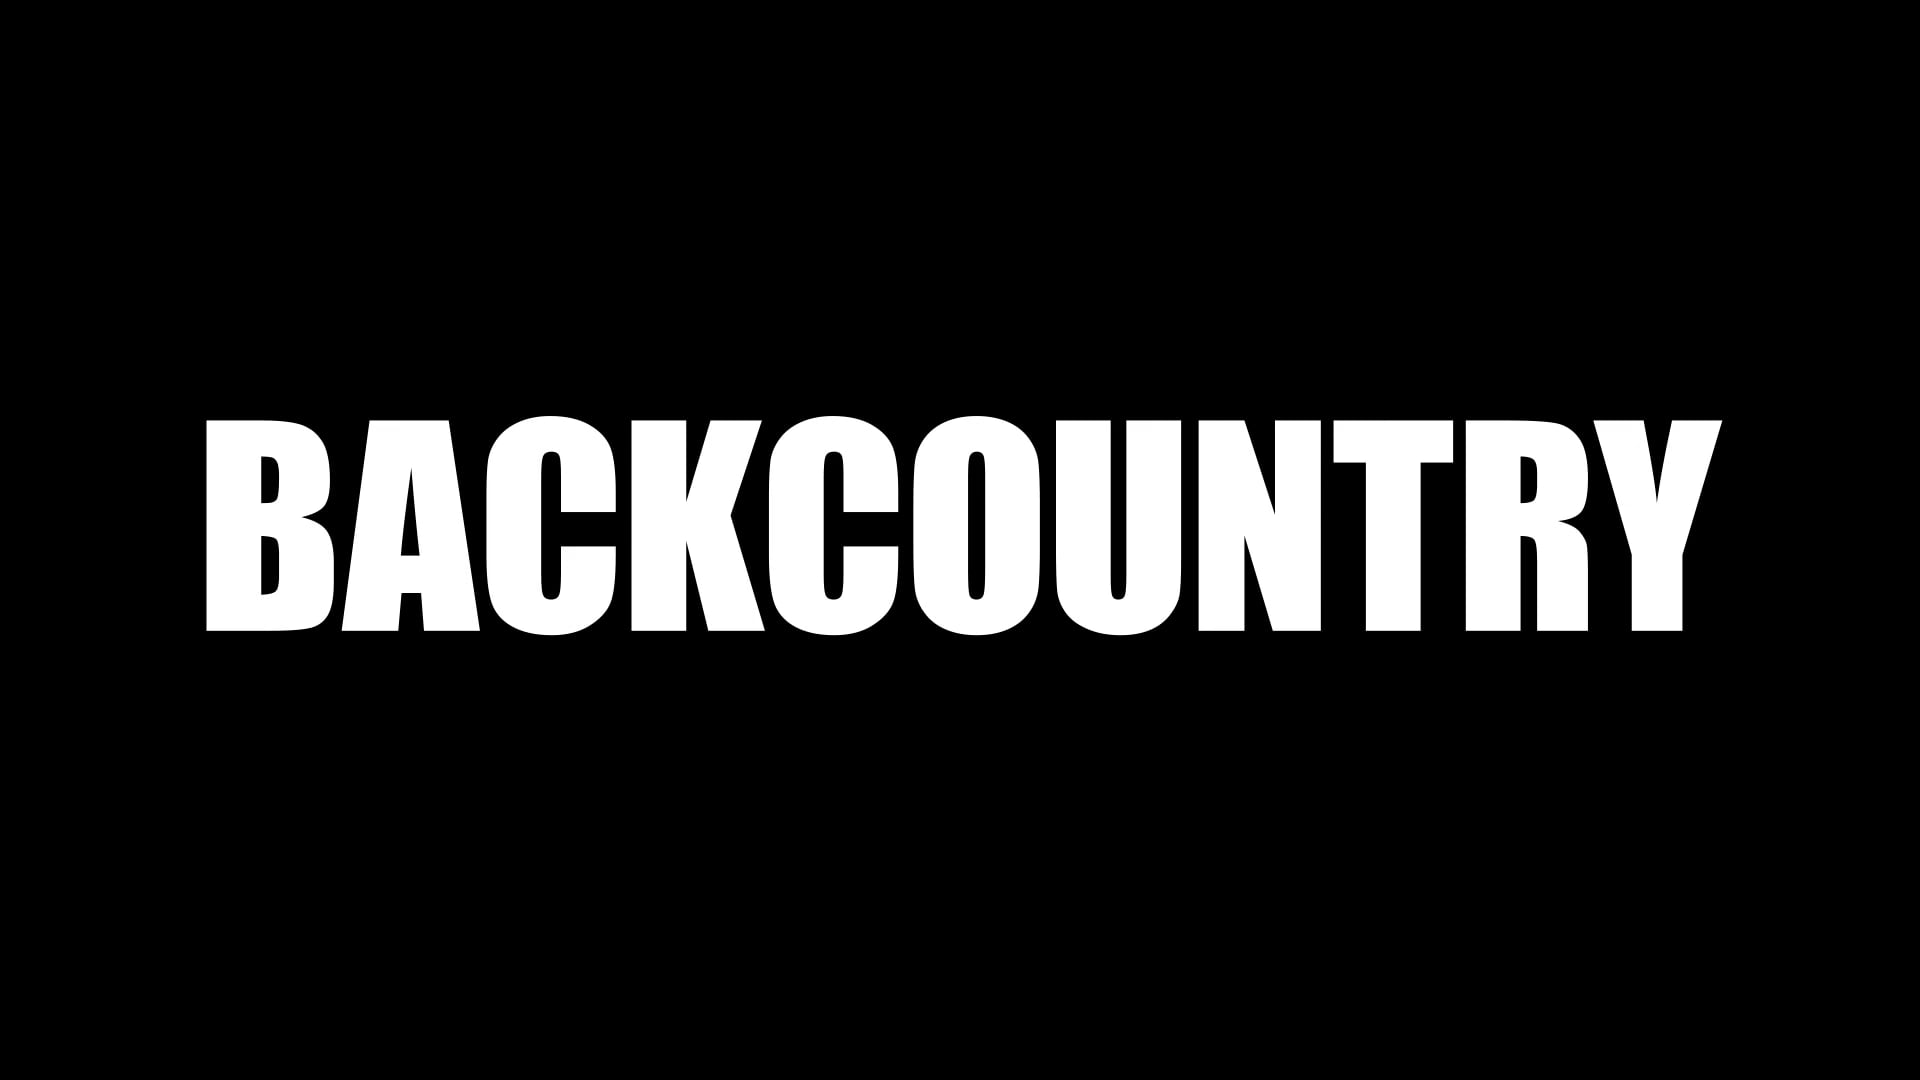 Backcountry Trailer